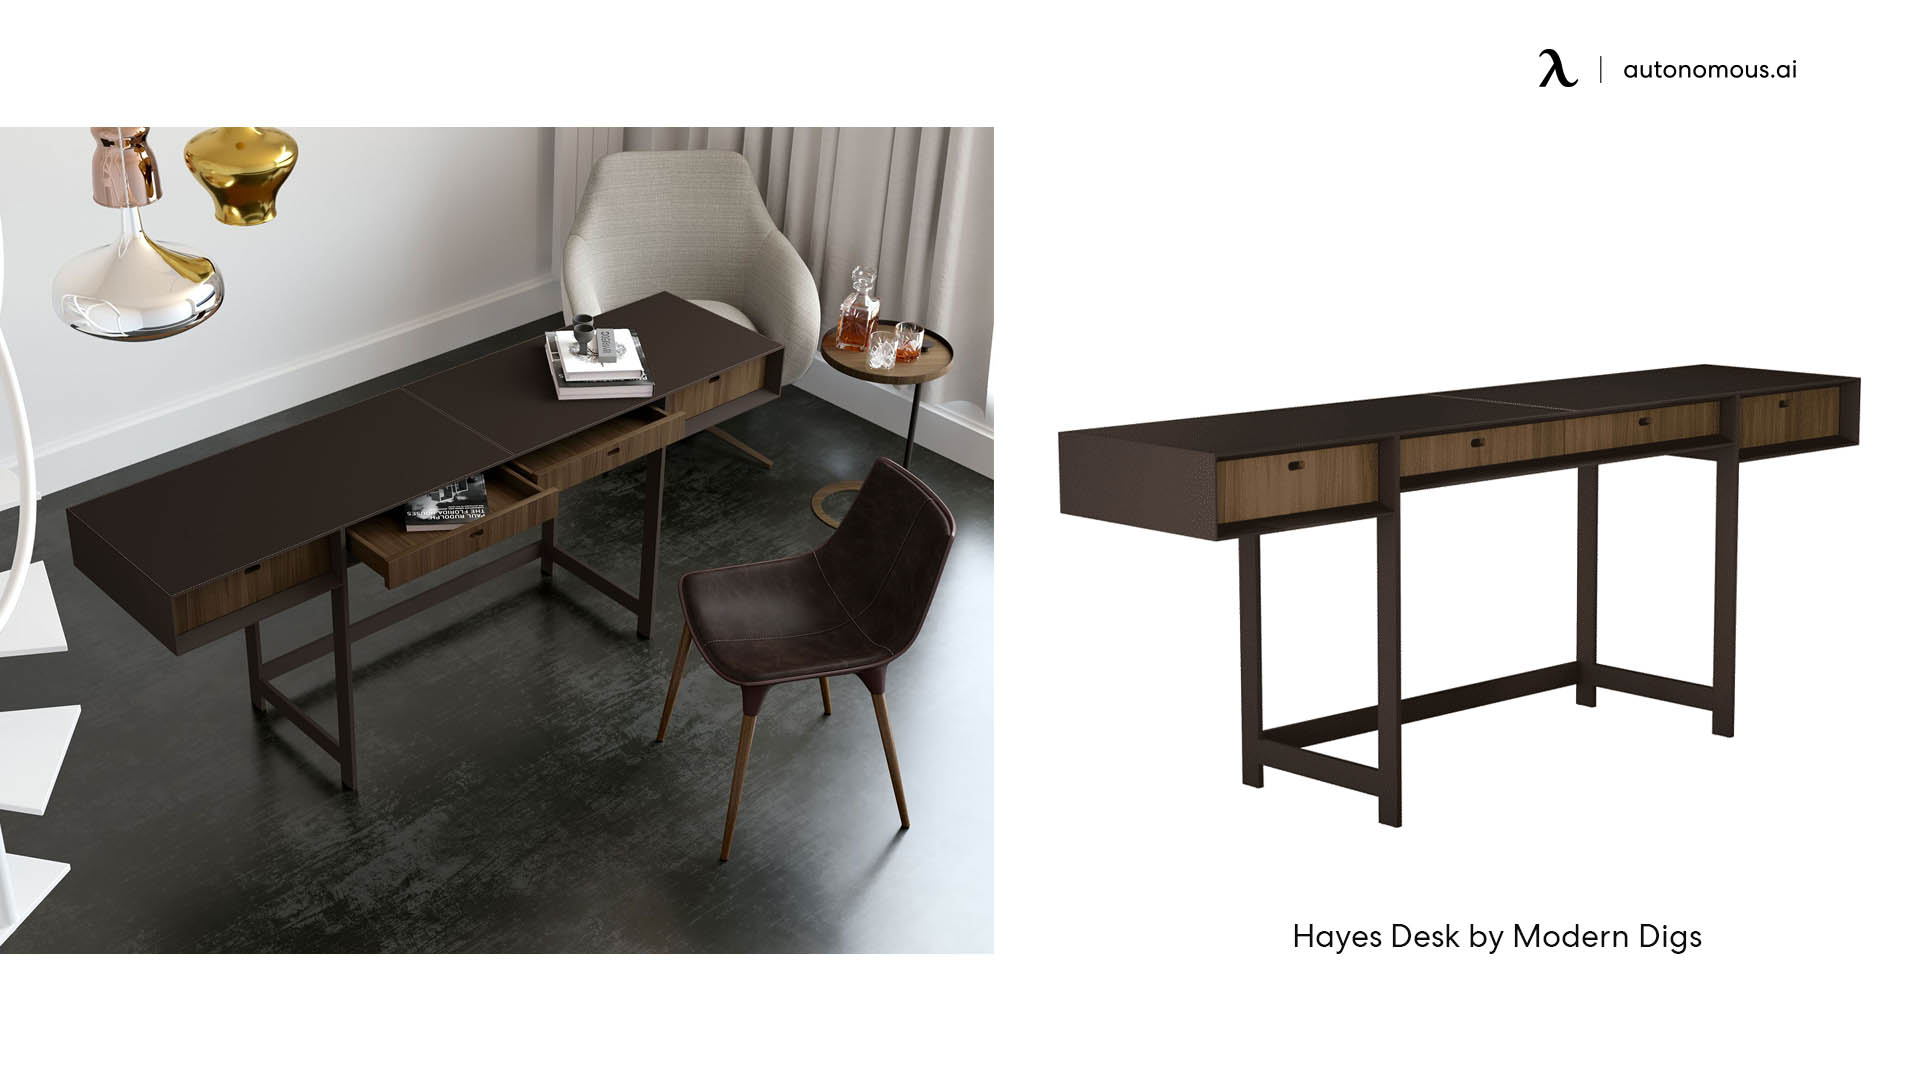 Hayes Desk by Modern Digs